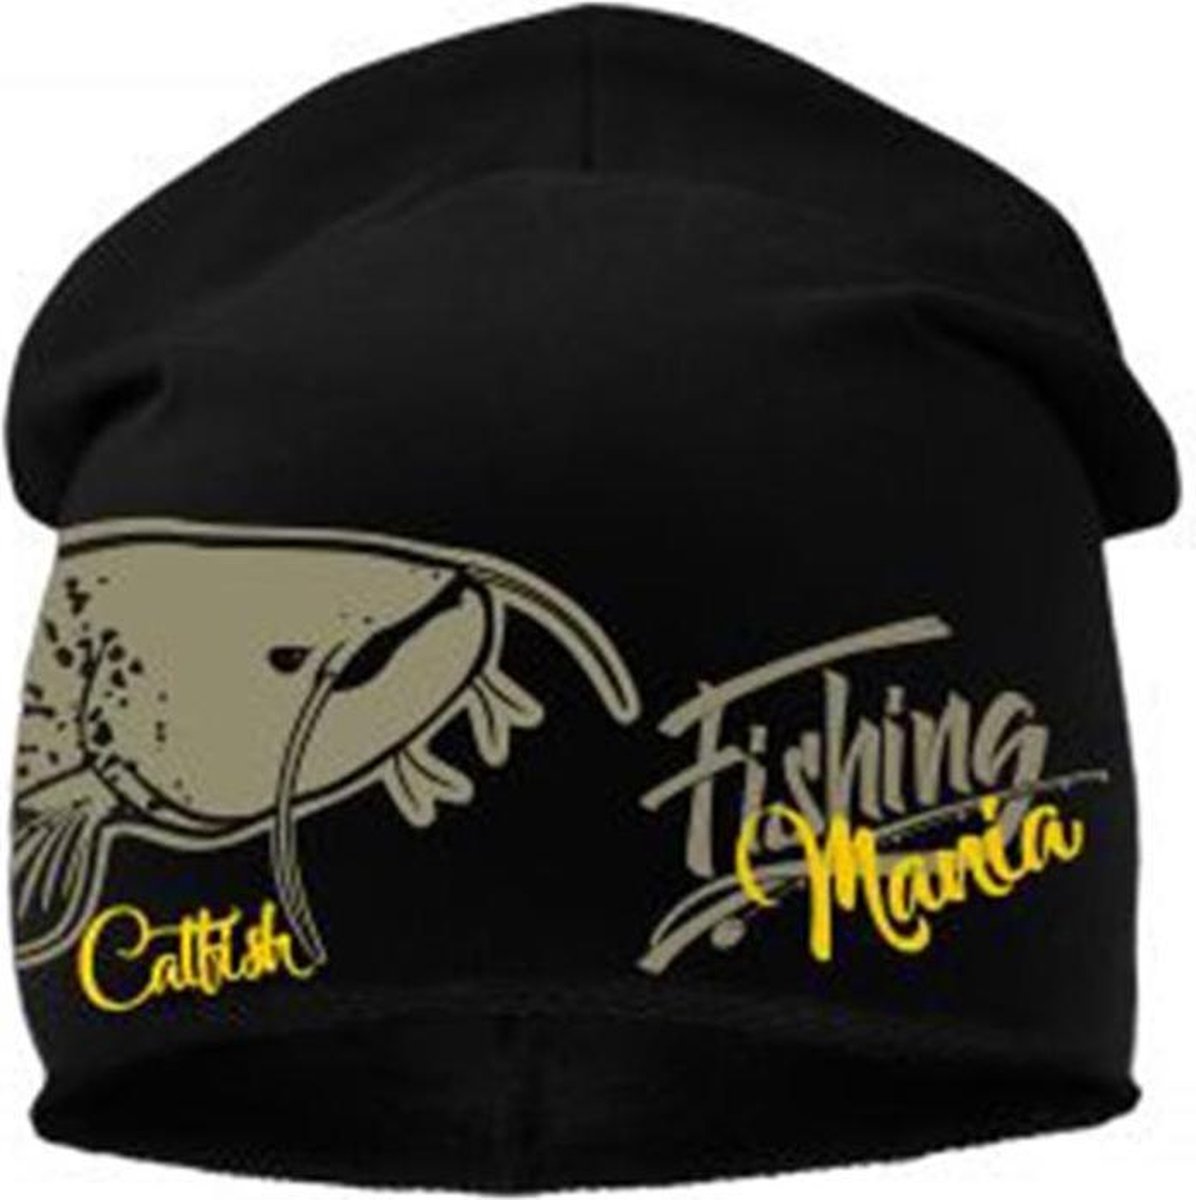 Hotspot Design Beanie - Catfishing Mania - Black